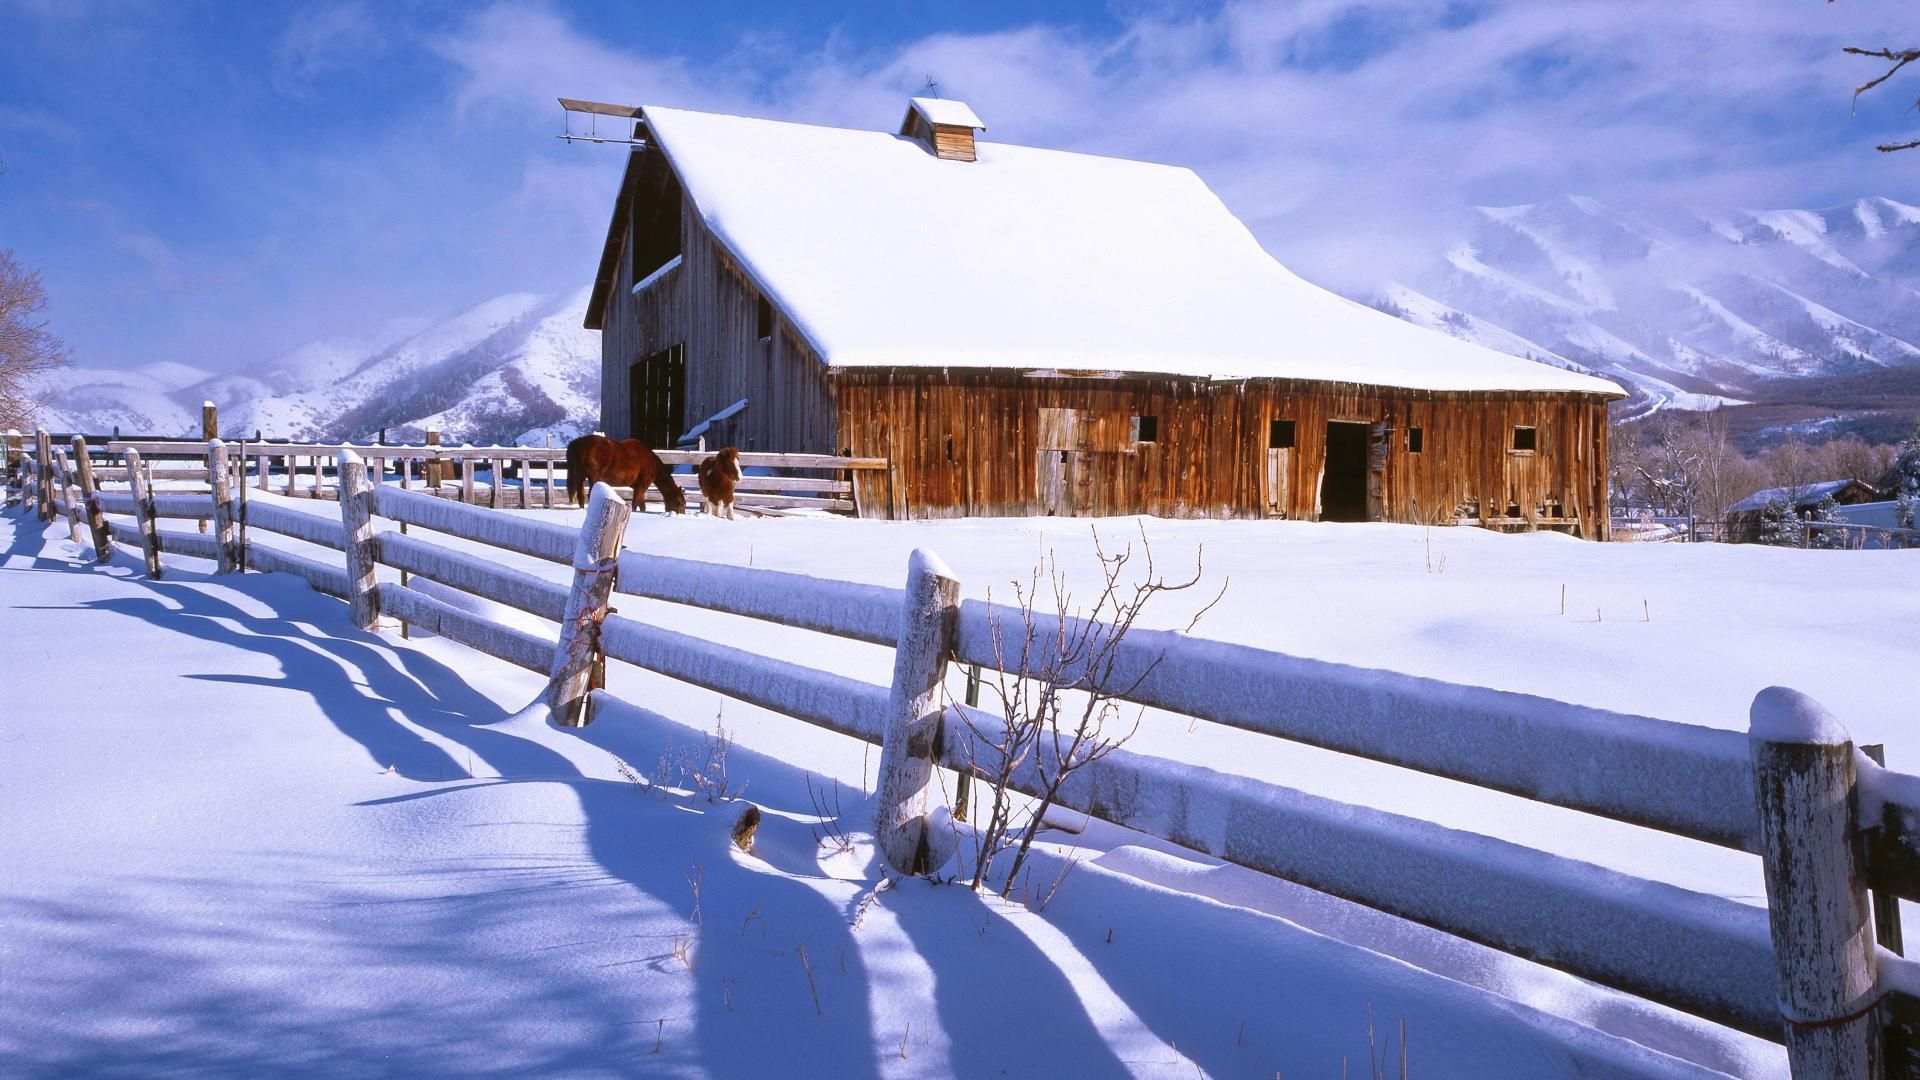 Wallpaper For > Winter Barn Wallpaper. Country landscaping, Winter scenes, Beautiful winter scenes